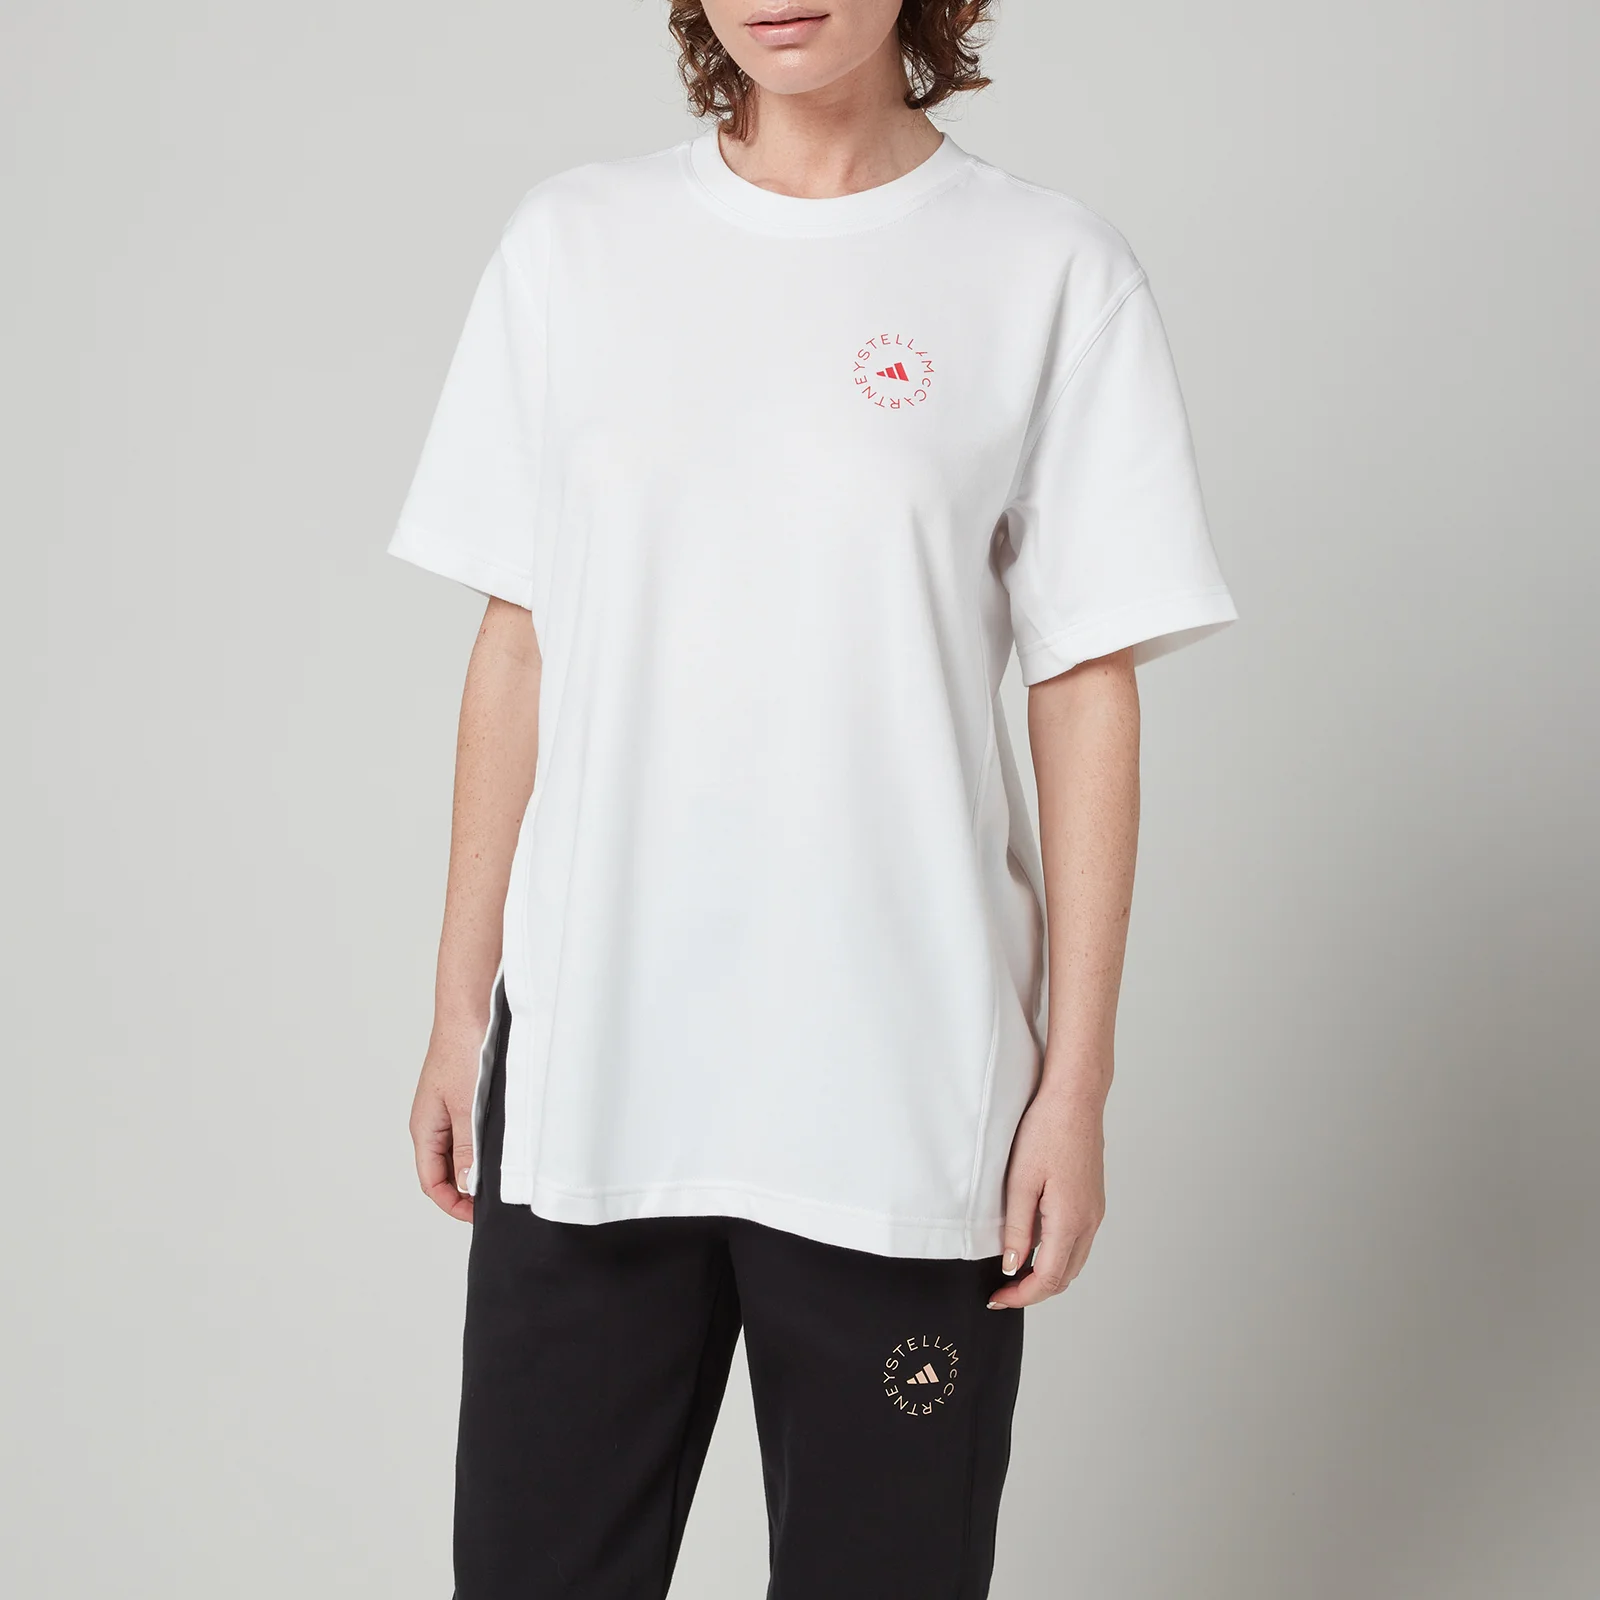 adidas by Stella McCartney Women's T-Shirt - White Image 1